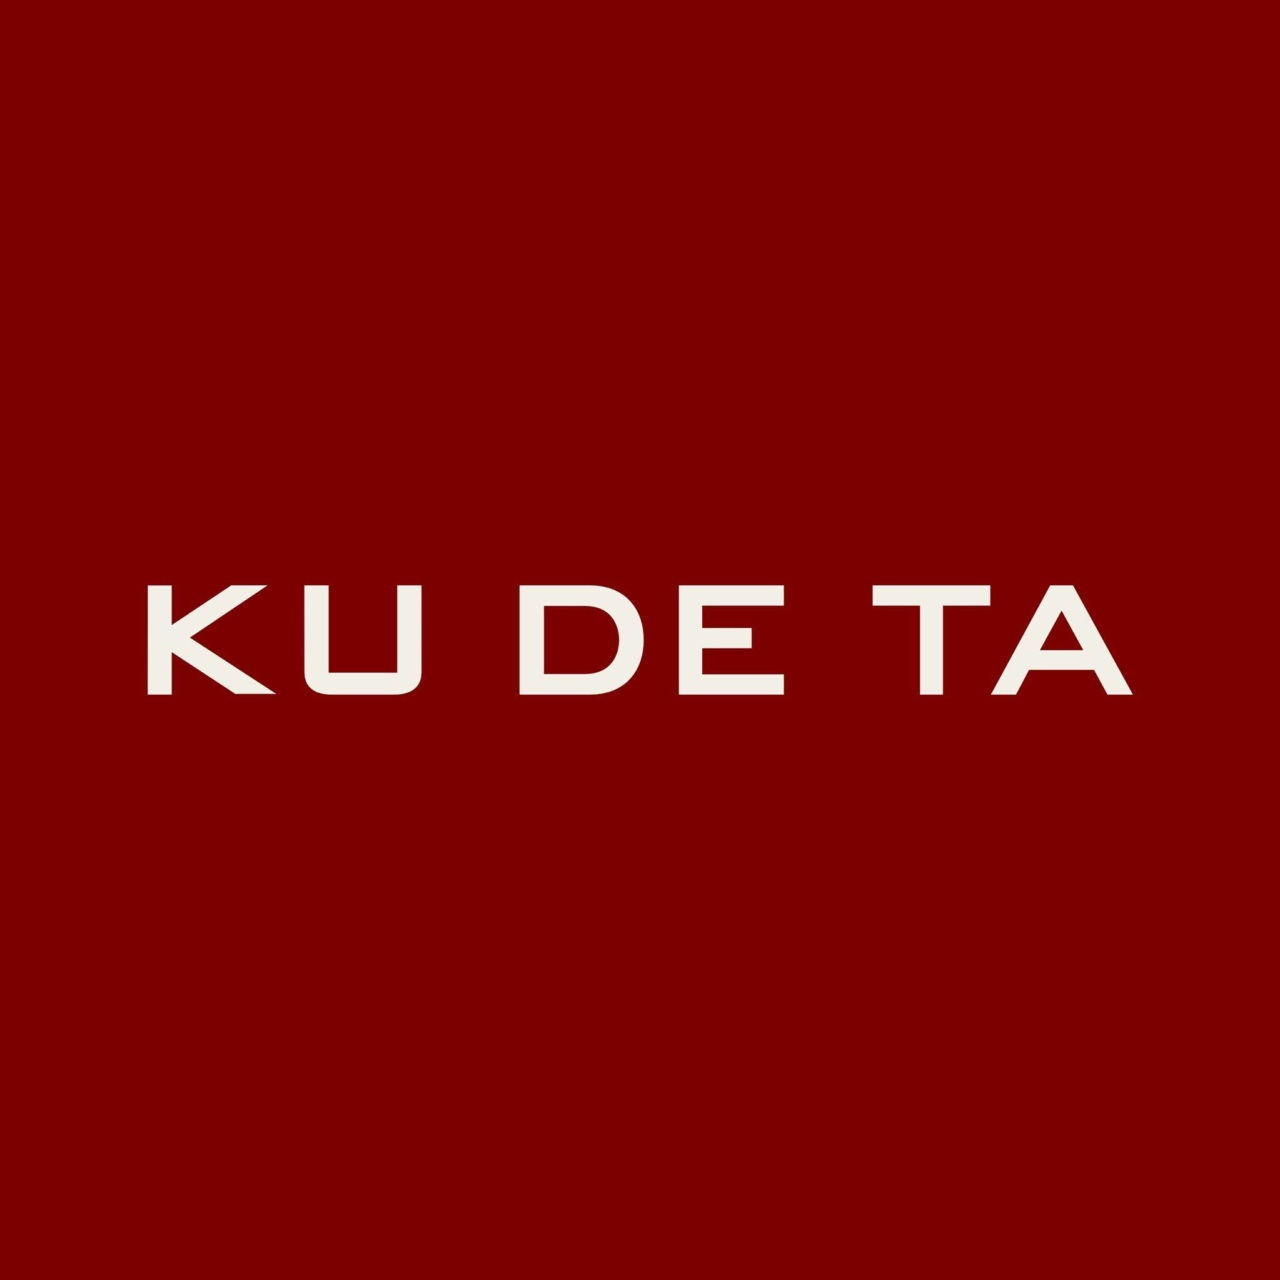 Kudeta-logo-1280x1280.jpg